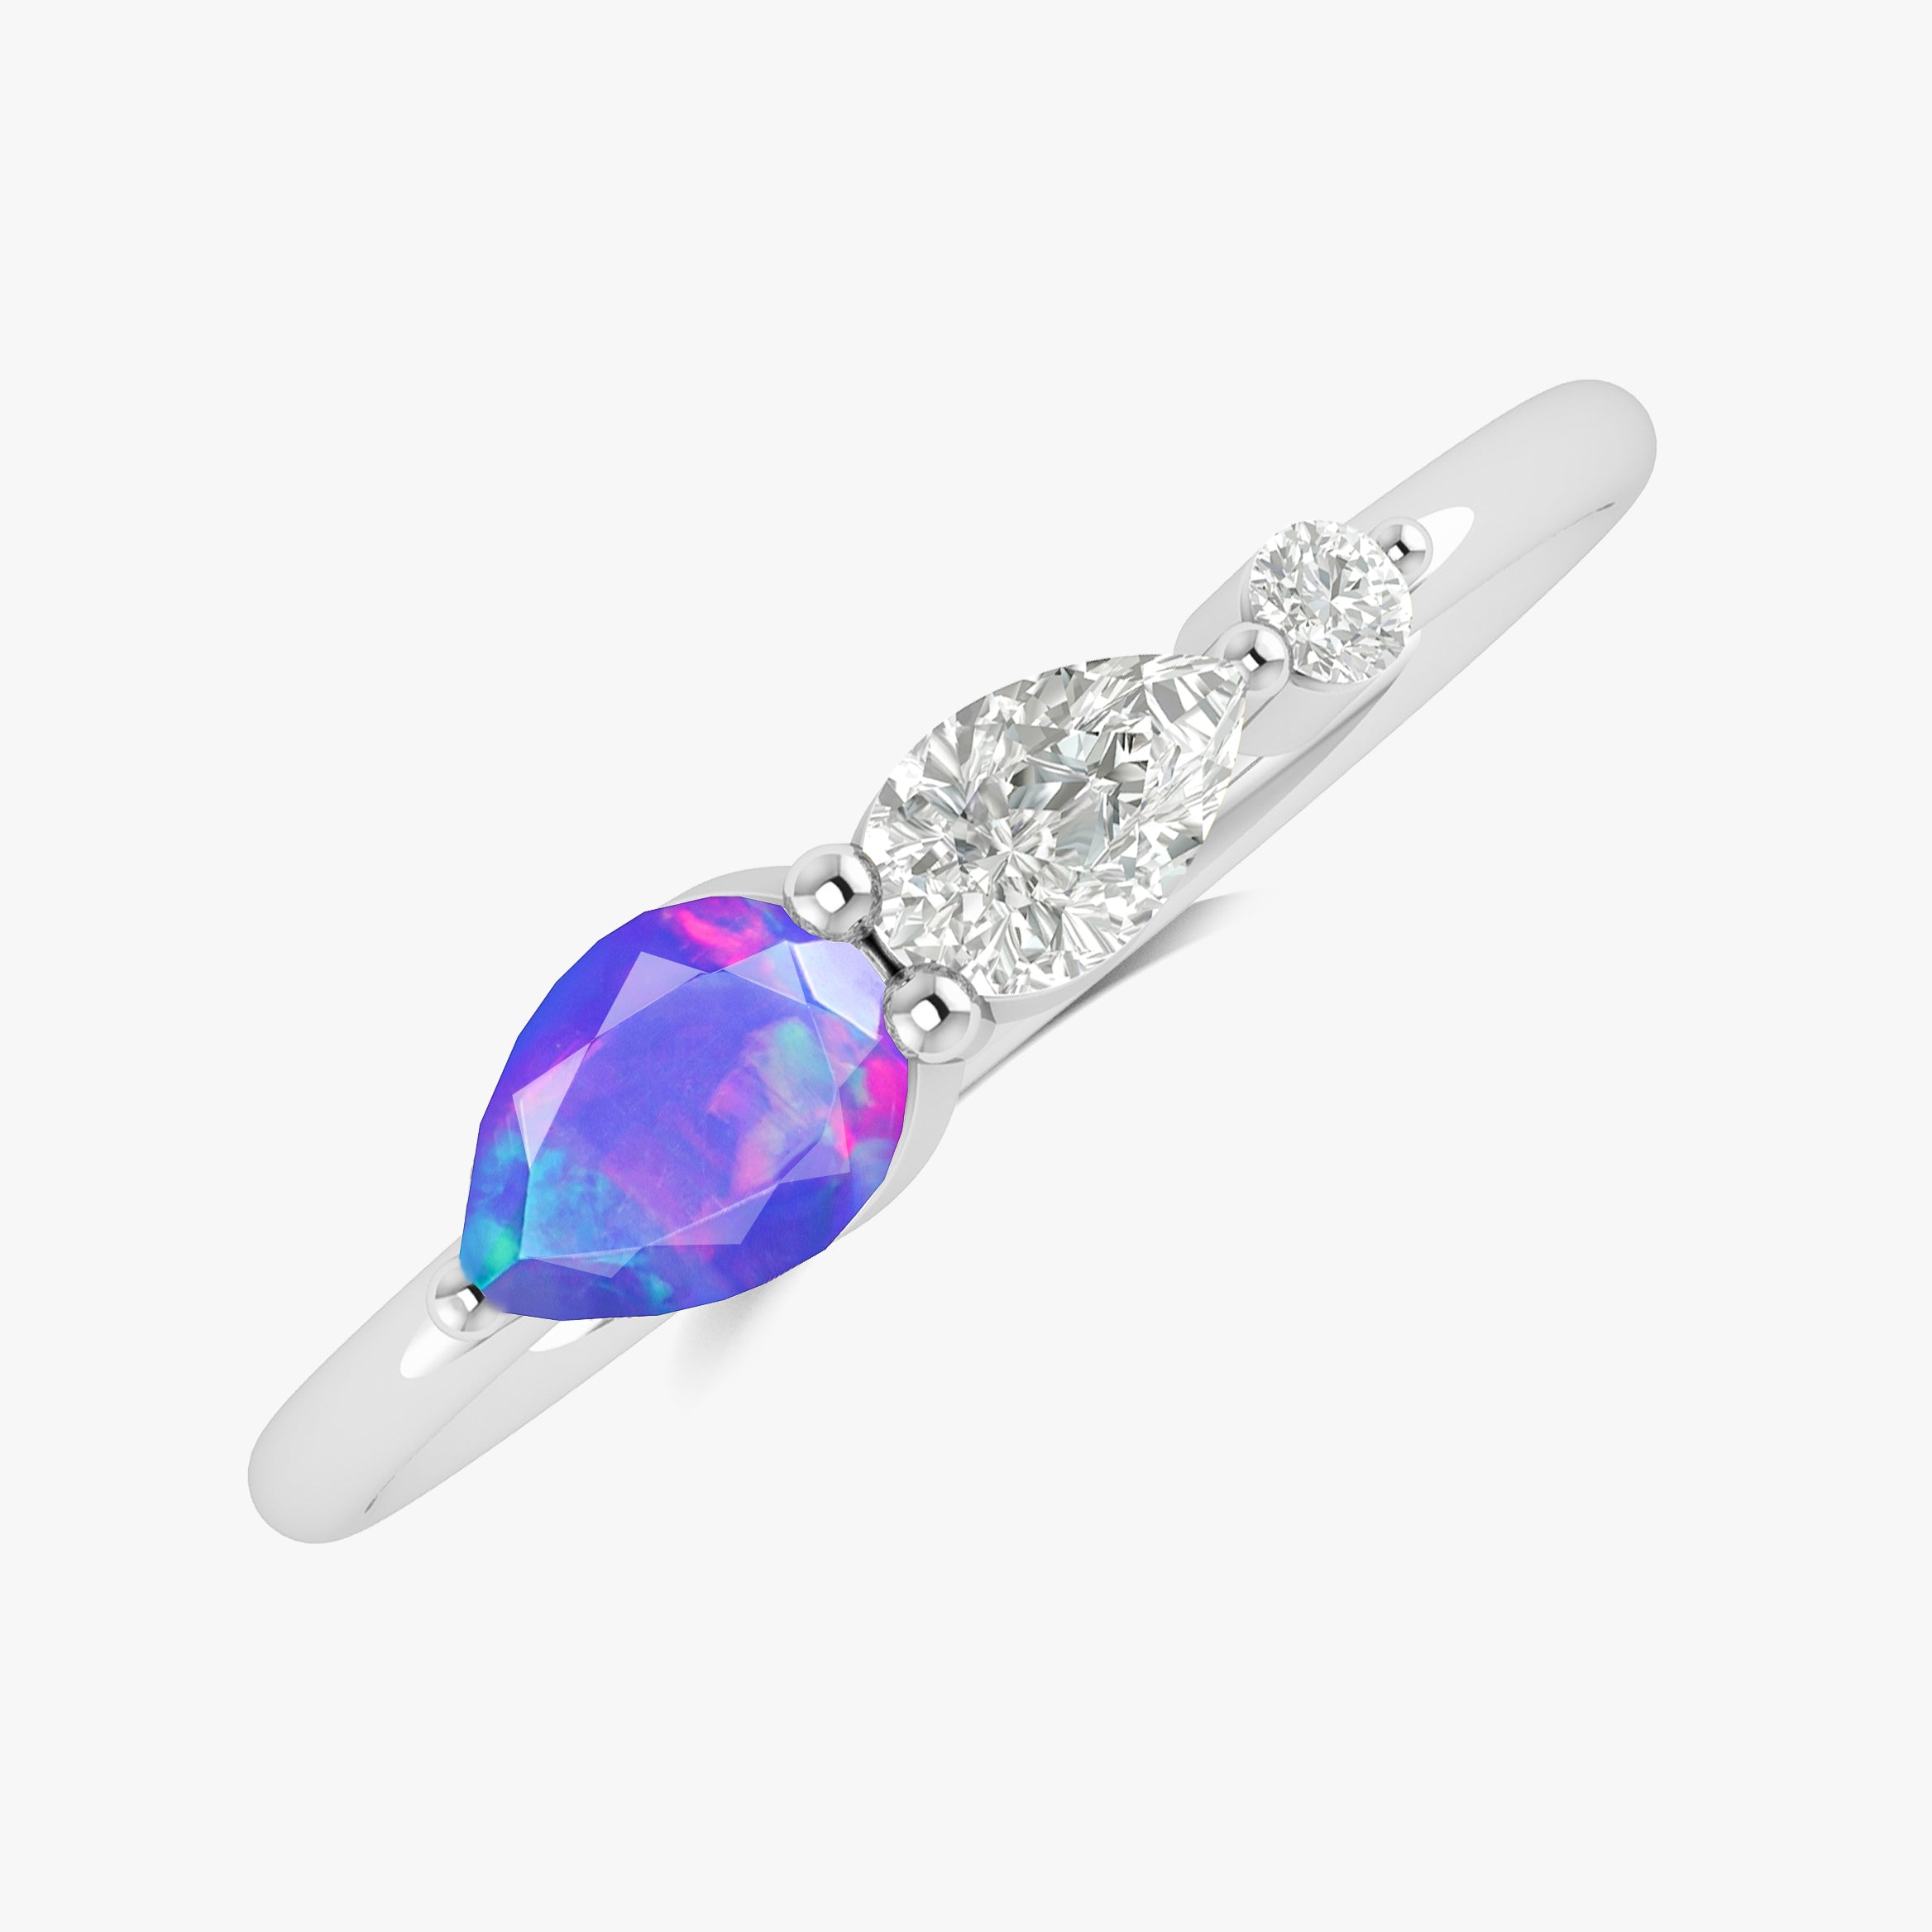 Lavender Fire Opal Pear Three Stone Ring